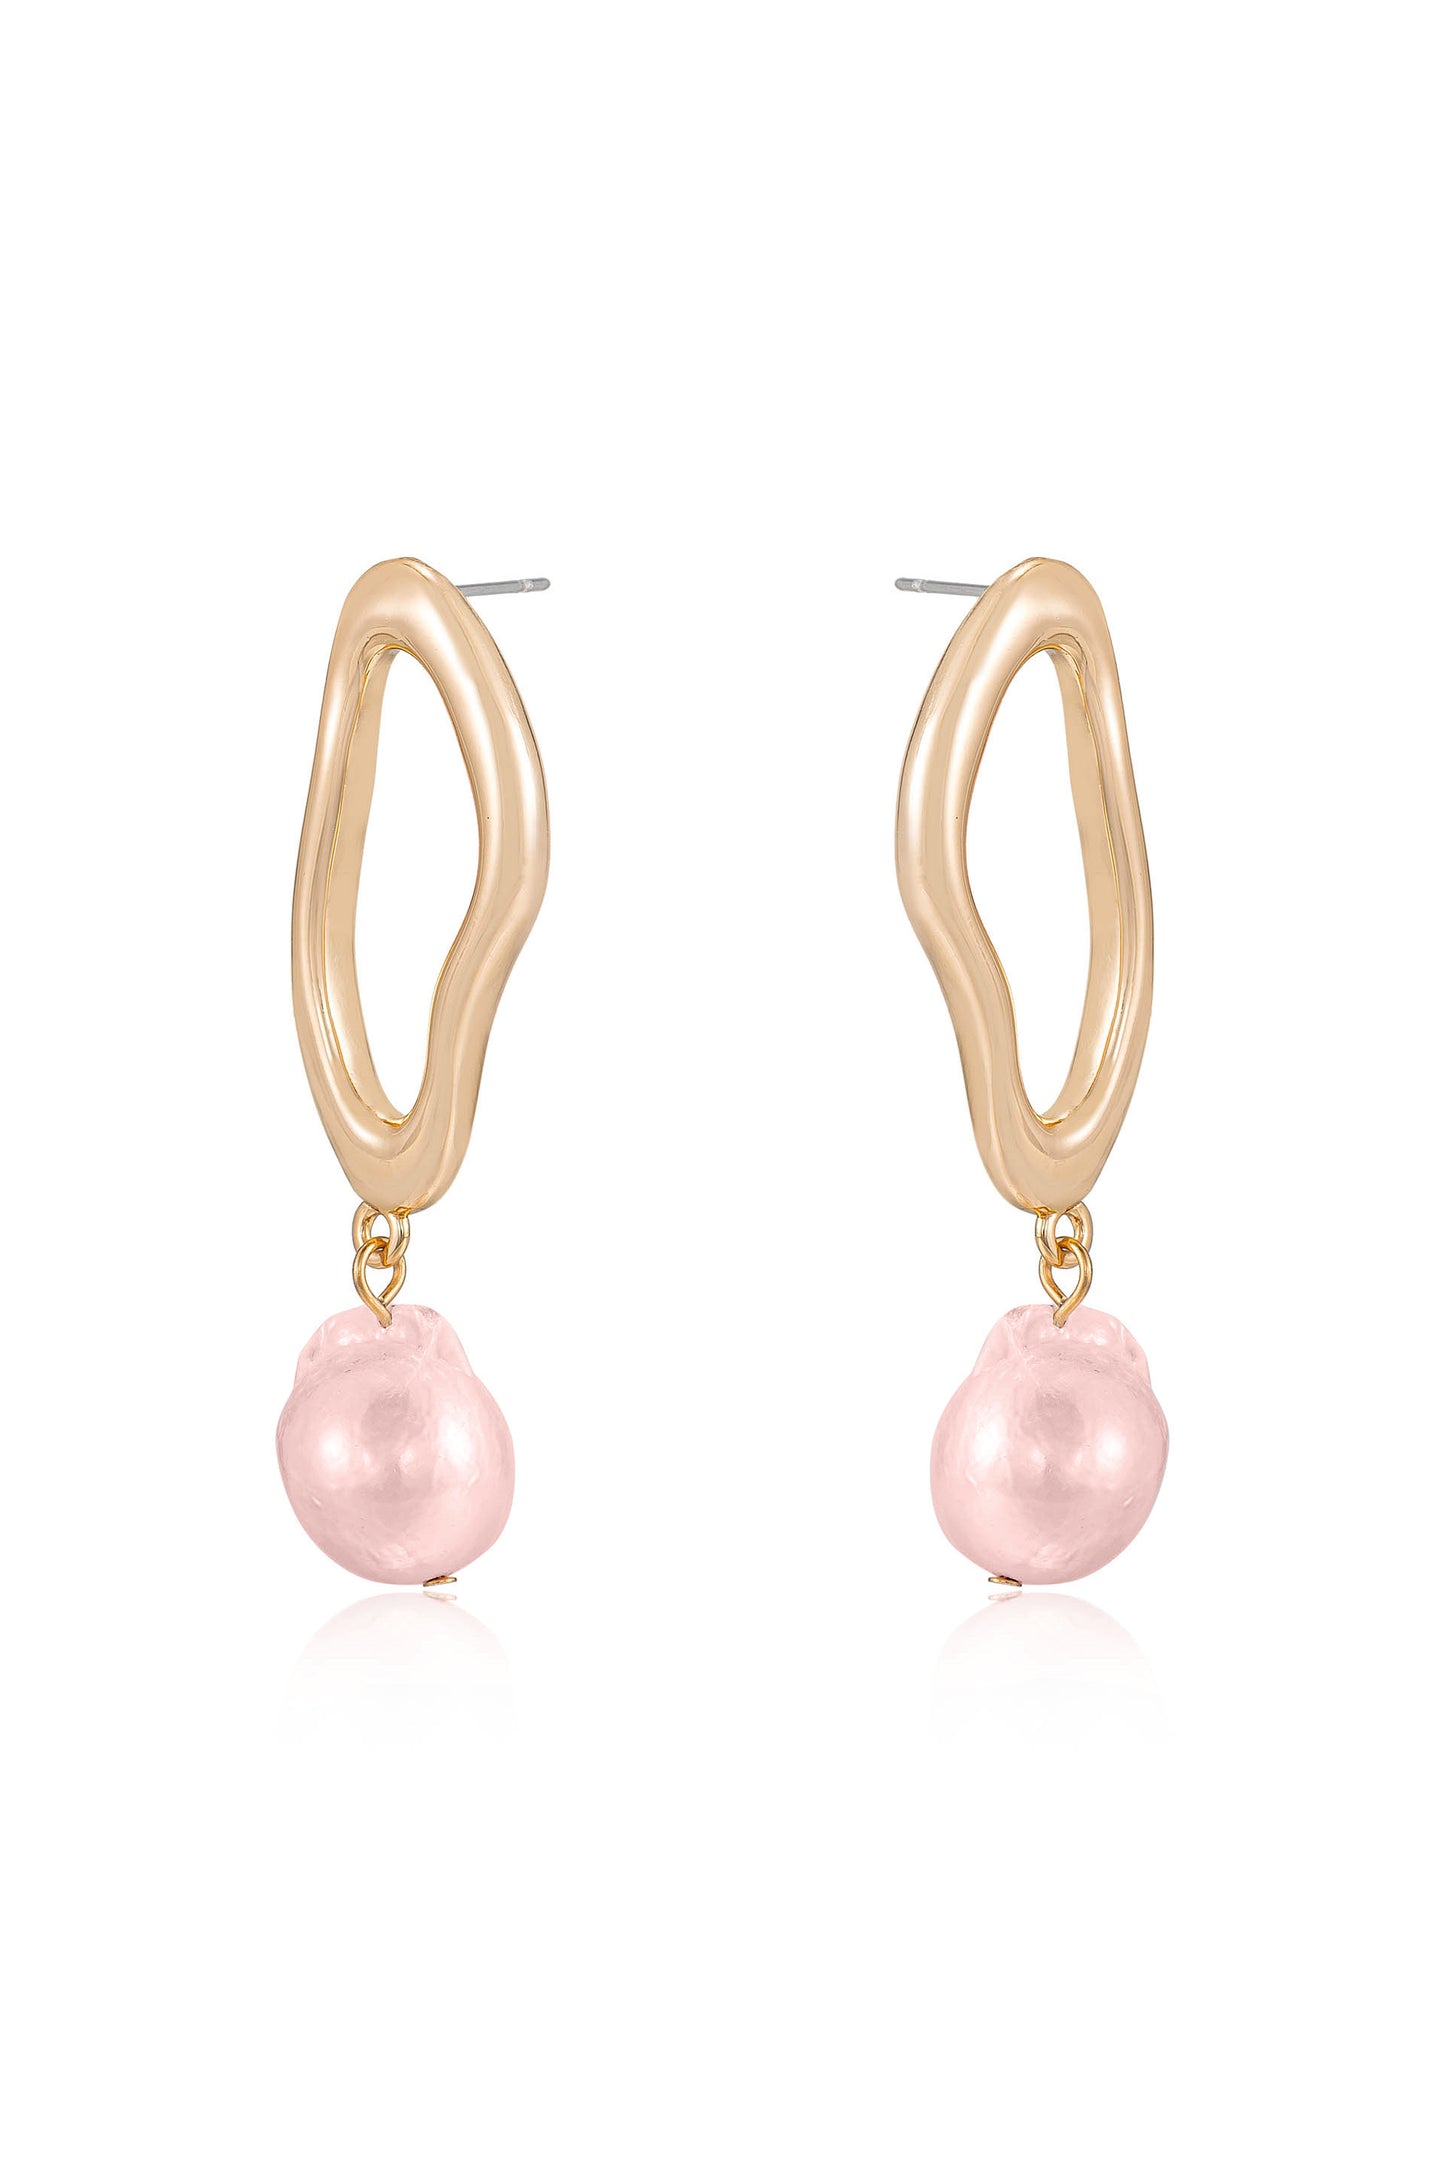 Open Circle Freshwater Pearl Dangle Earrings in pink pearl side view